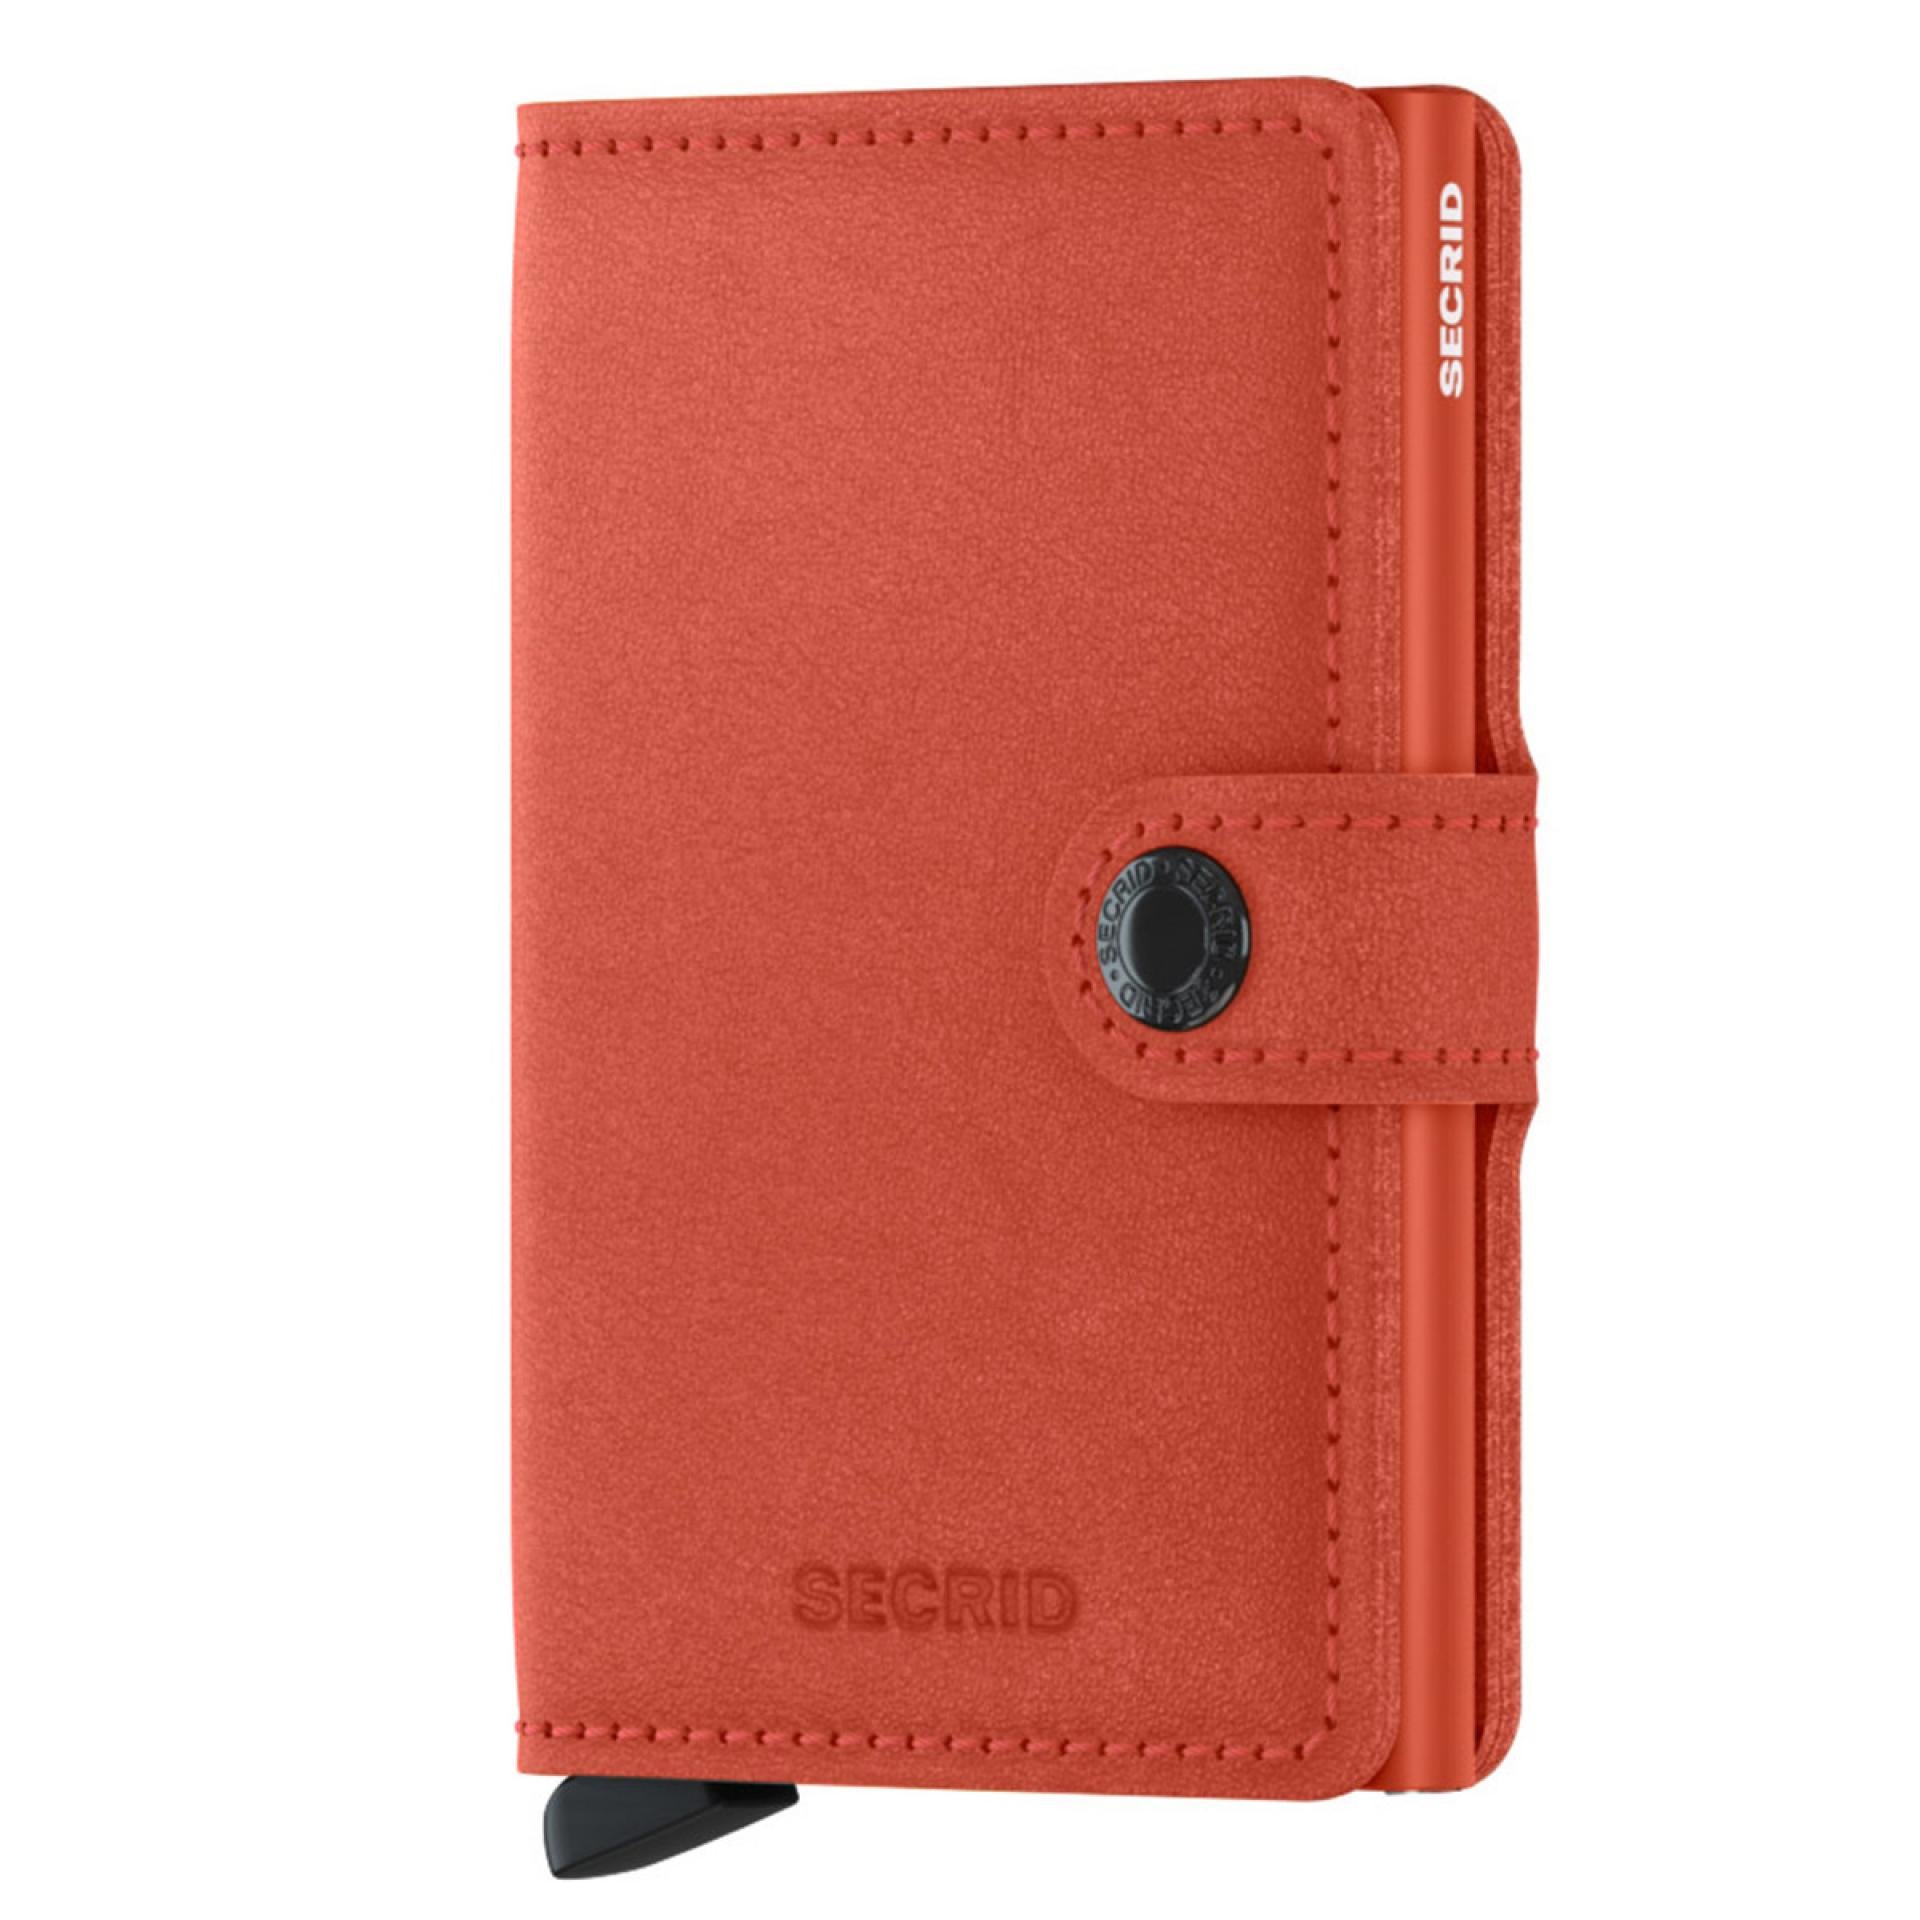 Secrid Wallet Portemonnaie Miniwallet Original RFID - Farbe: Orange